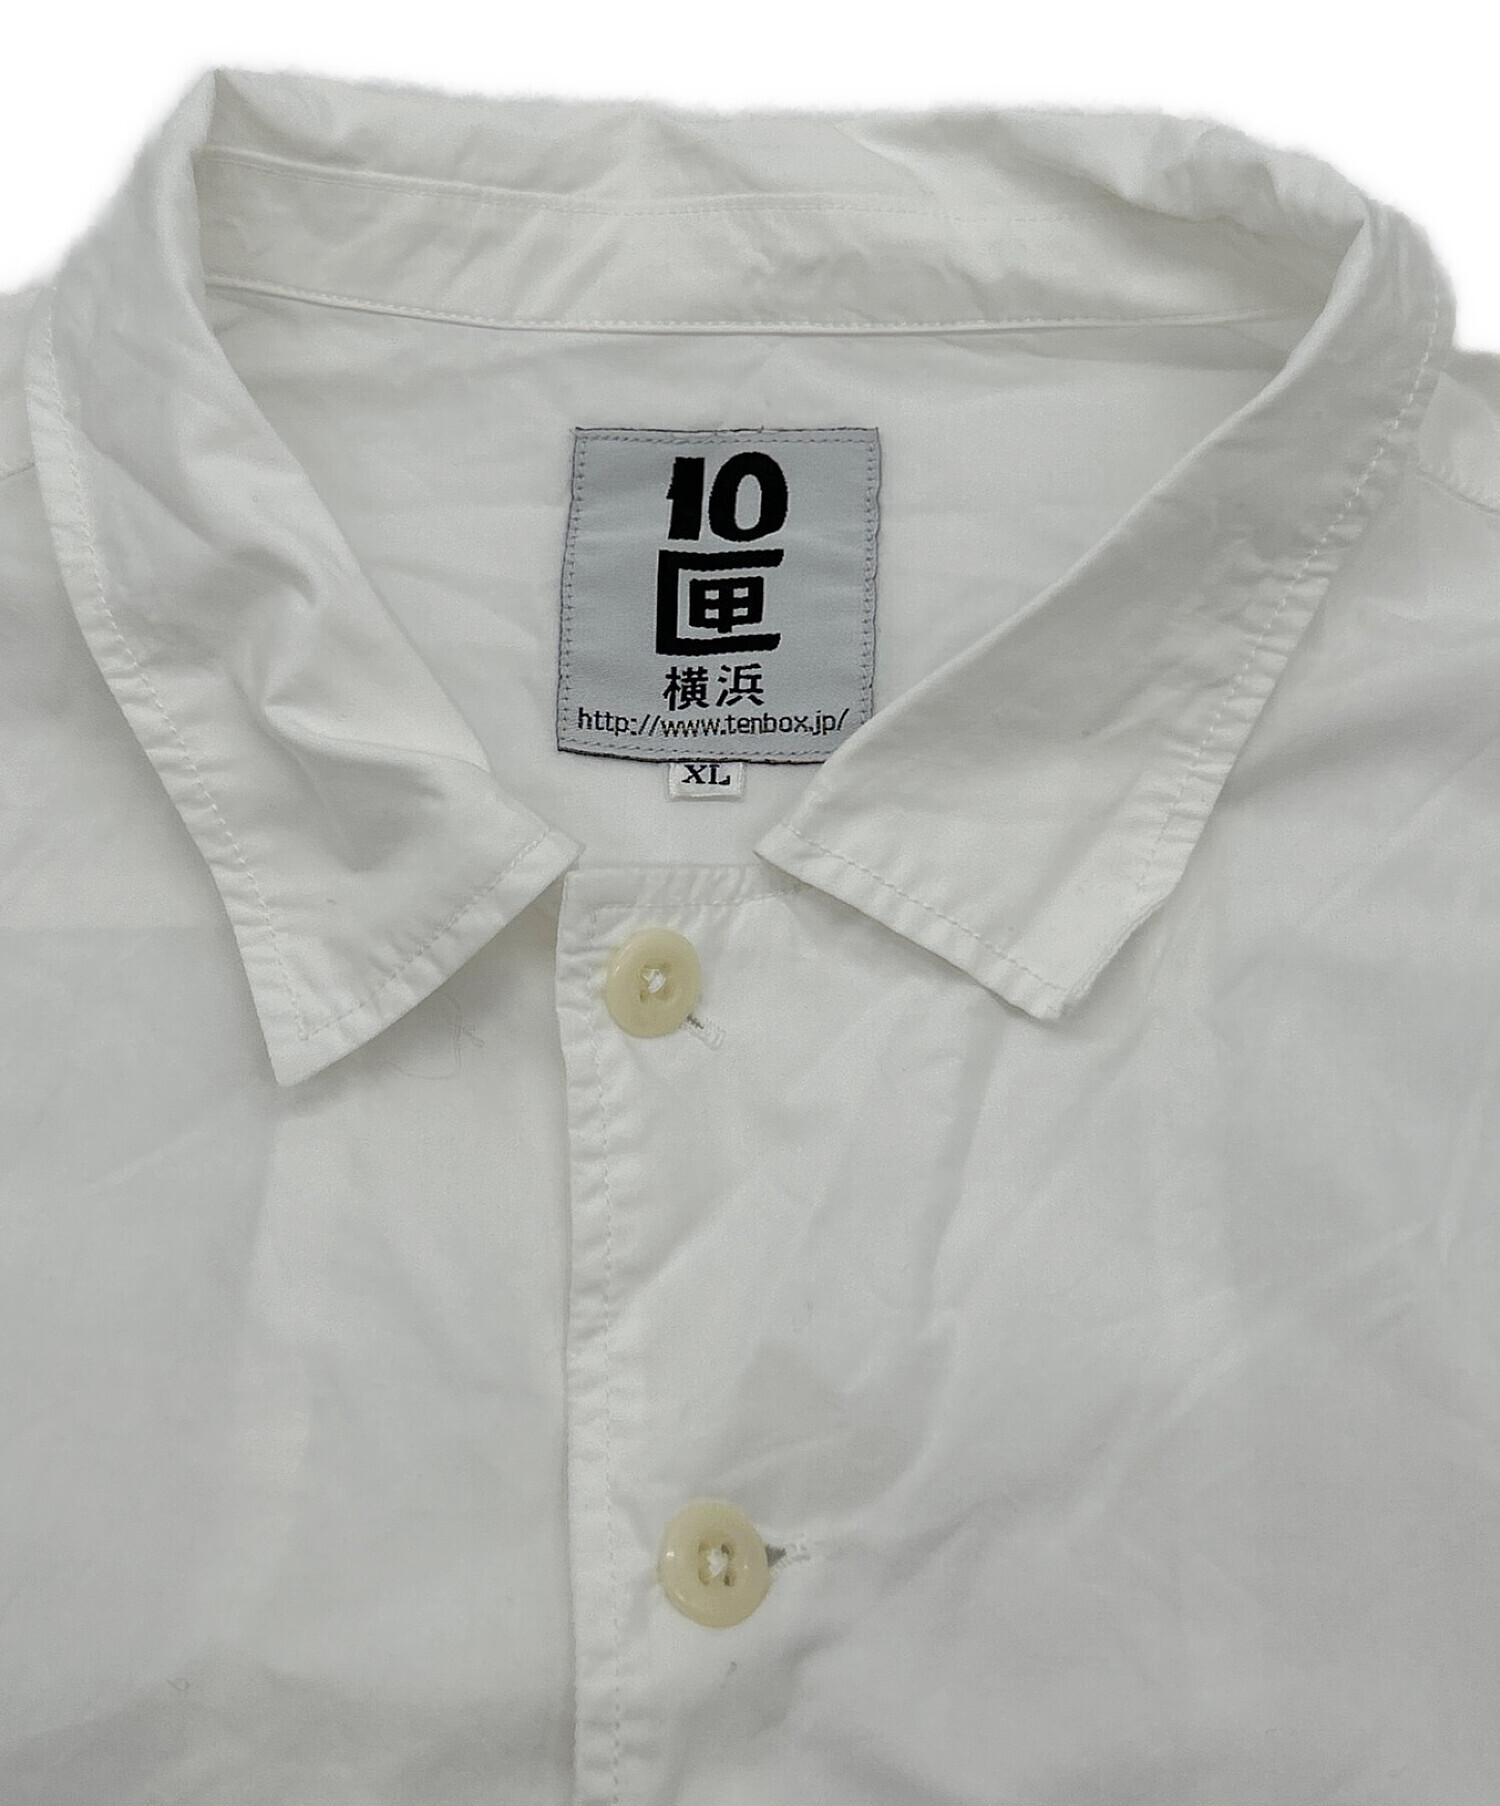 TENBOX (テンボックス) ドラッグディーラーシャツ ホワイト×ブルー サイズ:size XL